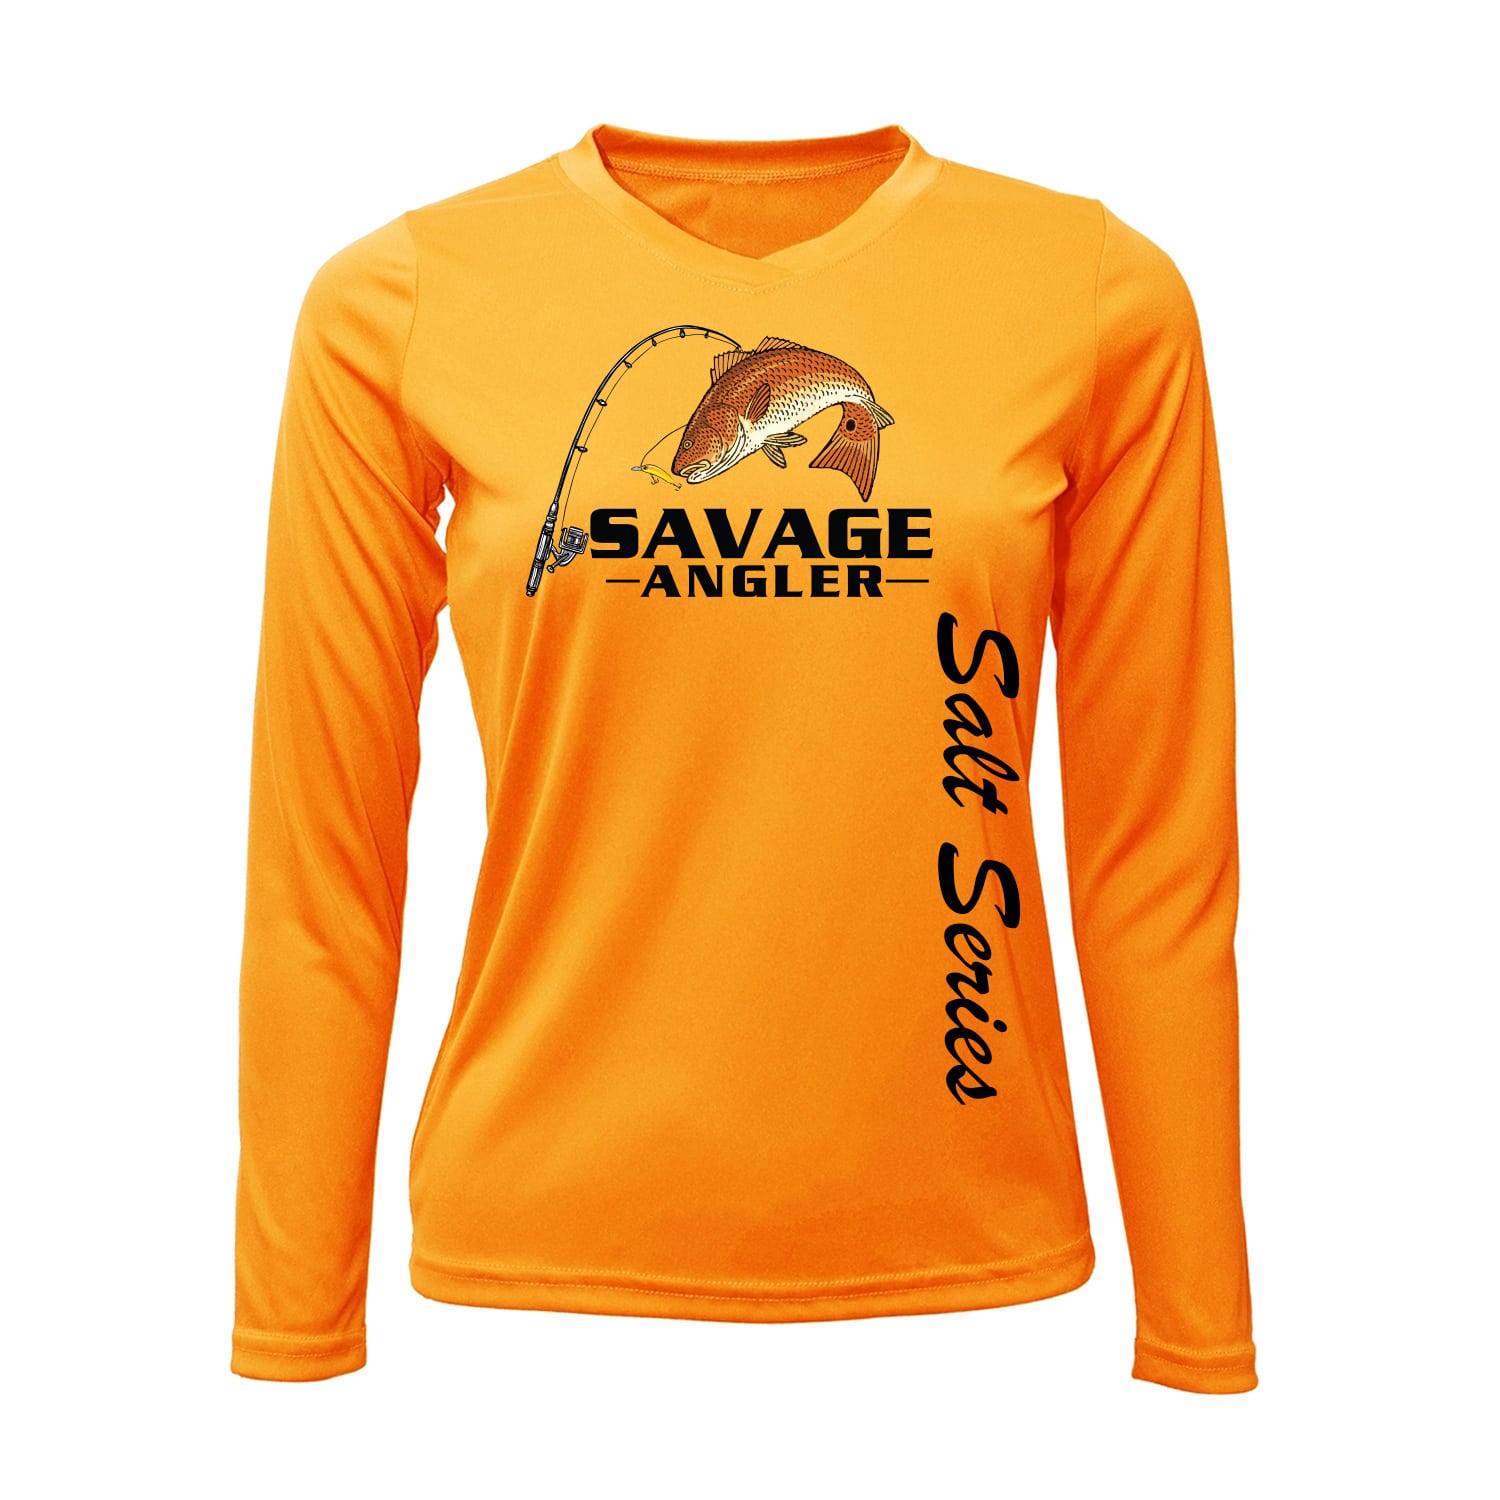 https://savageangler.com/wp-content/uploads/2021/03/Savage-Angler-Womens-Performance-Shirt_Safety_Orange_Front-1.jpg